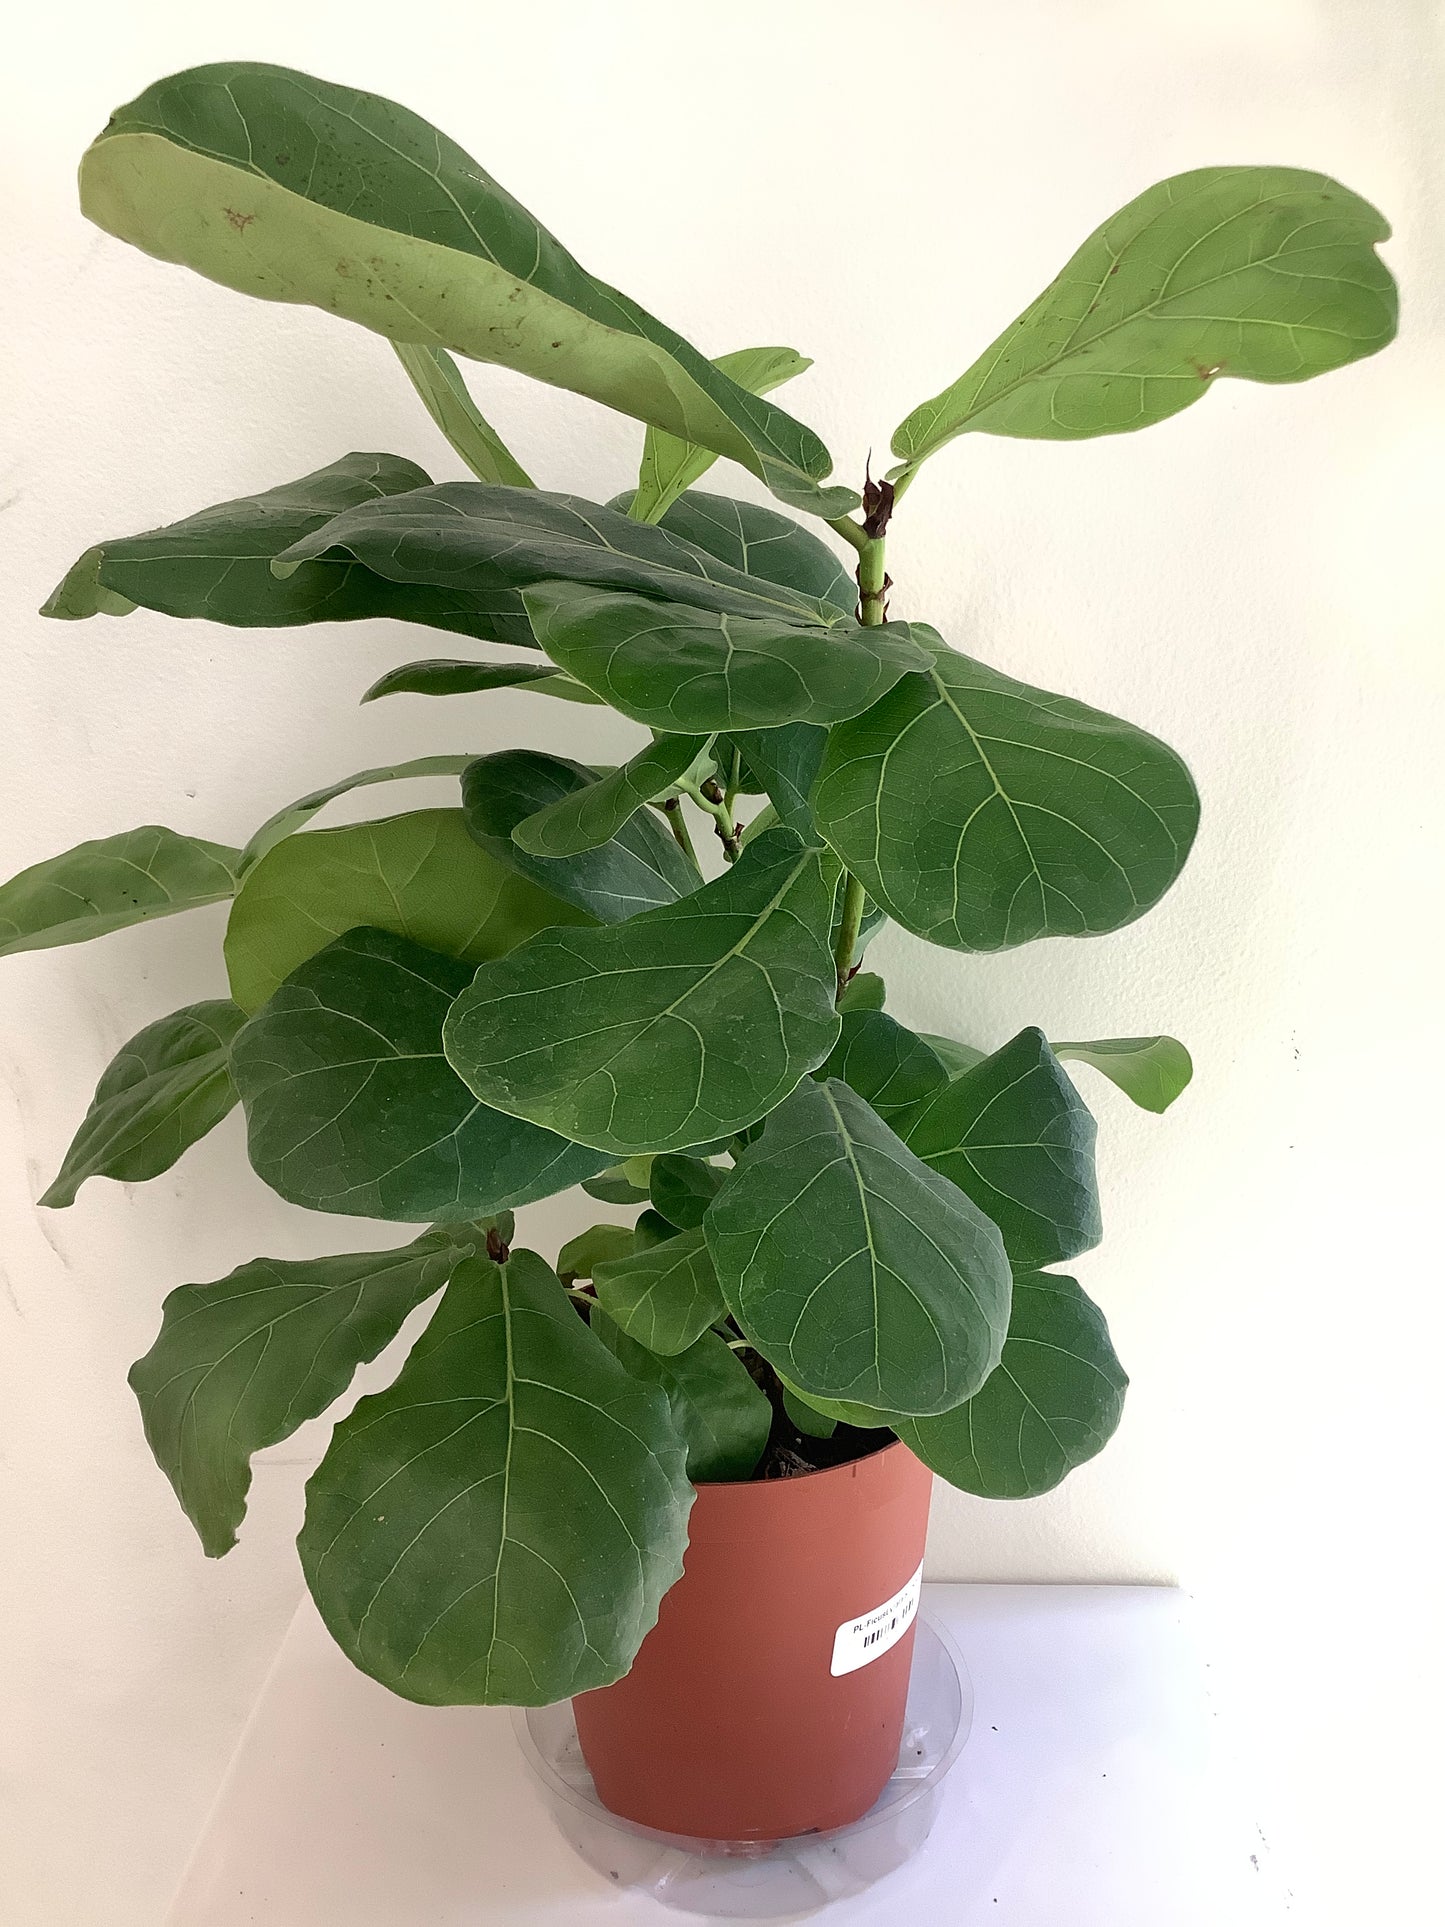 Ficus Lyrata "Fiddle-Leaf Fig" Plant - 6" Container